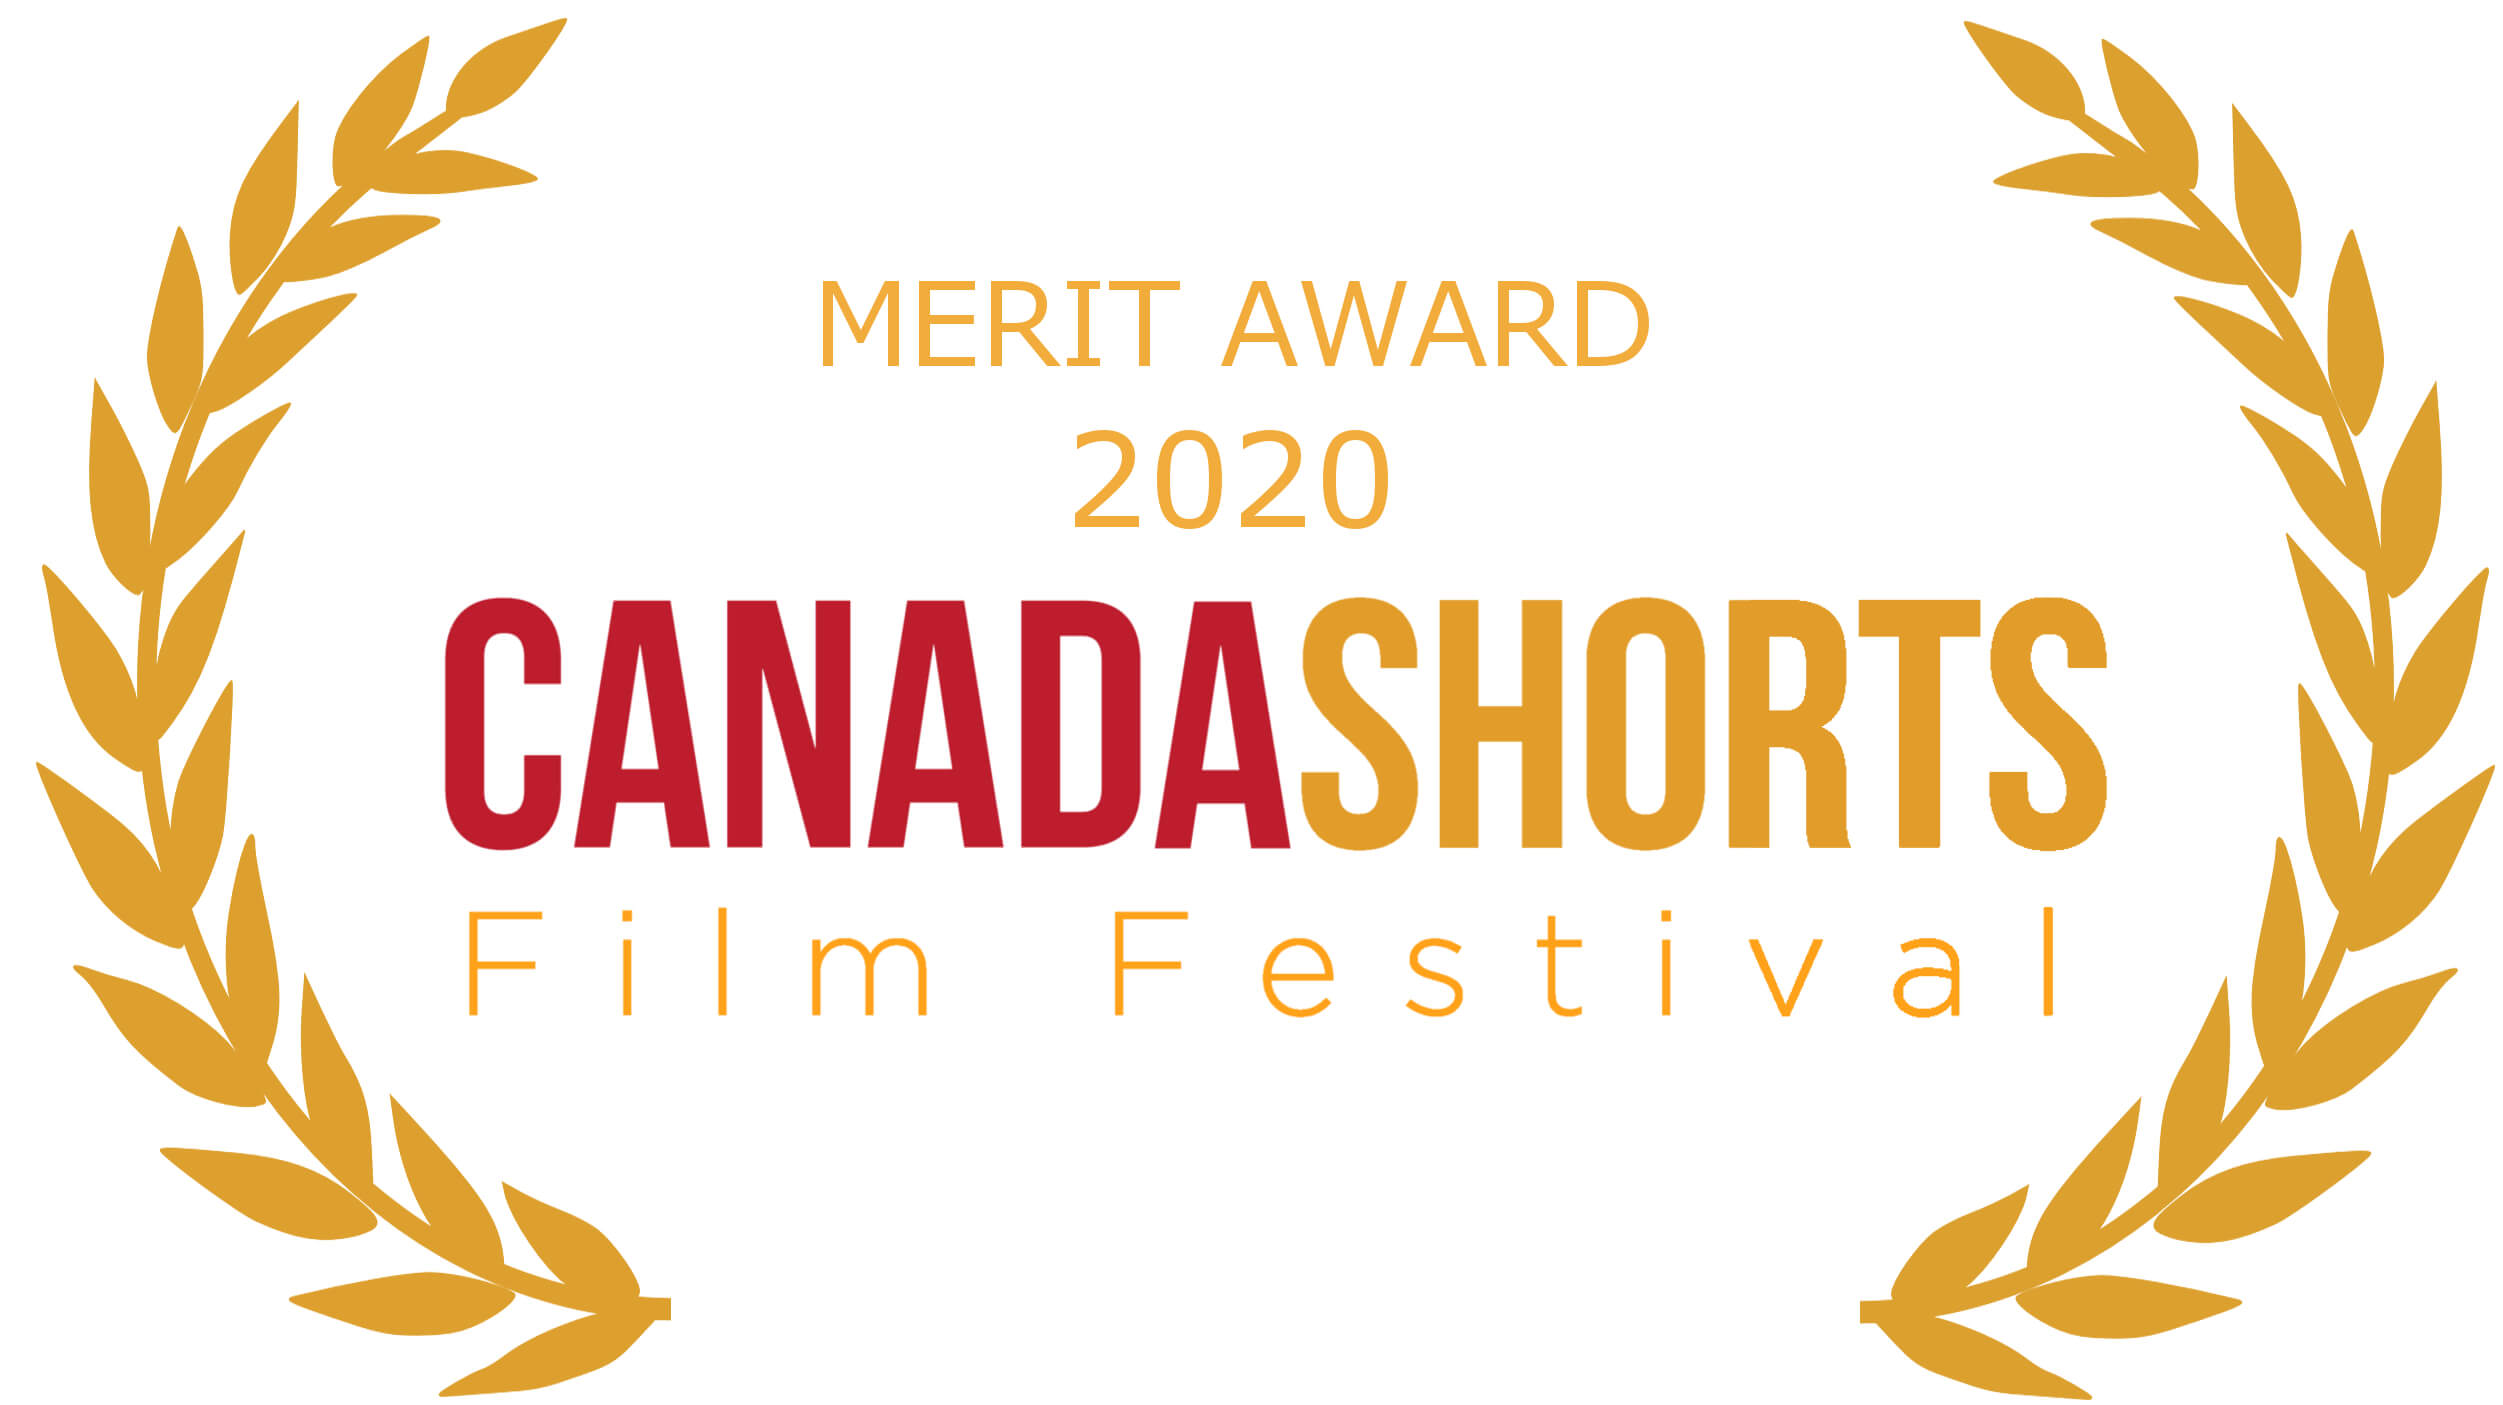 MERIT AWARD 2020 - CANADASHORTS FILM FESTIVAL